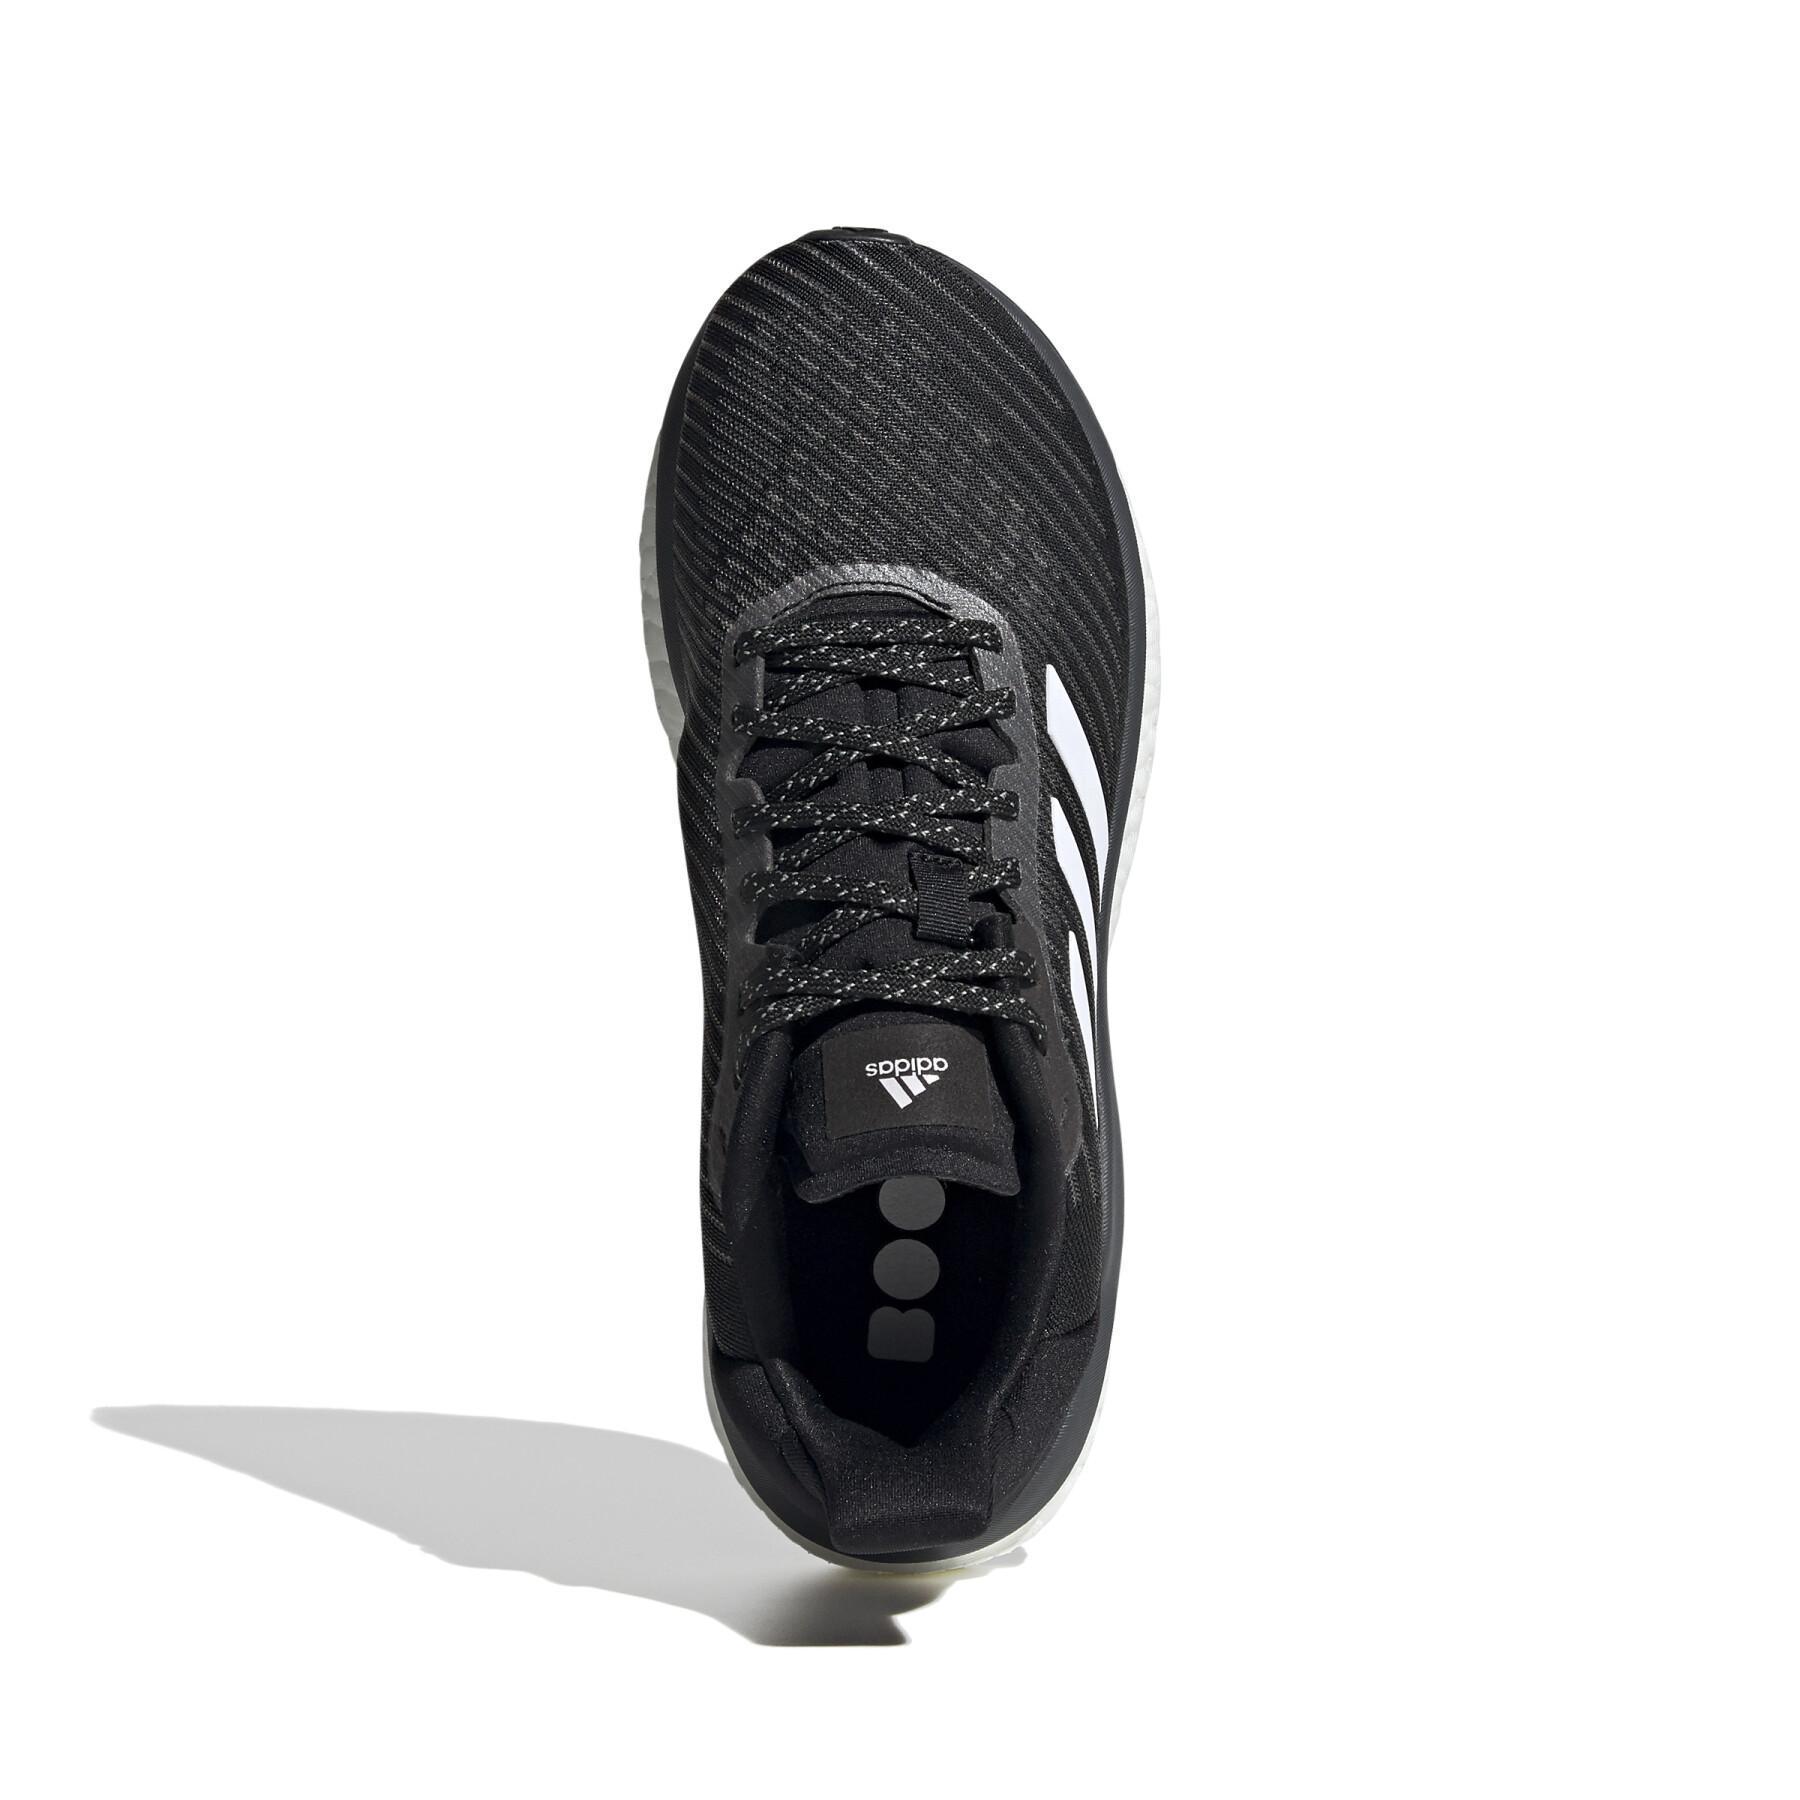 Women's shoes adidas Solar Drive - adidas - Shoes Running - Running